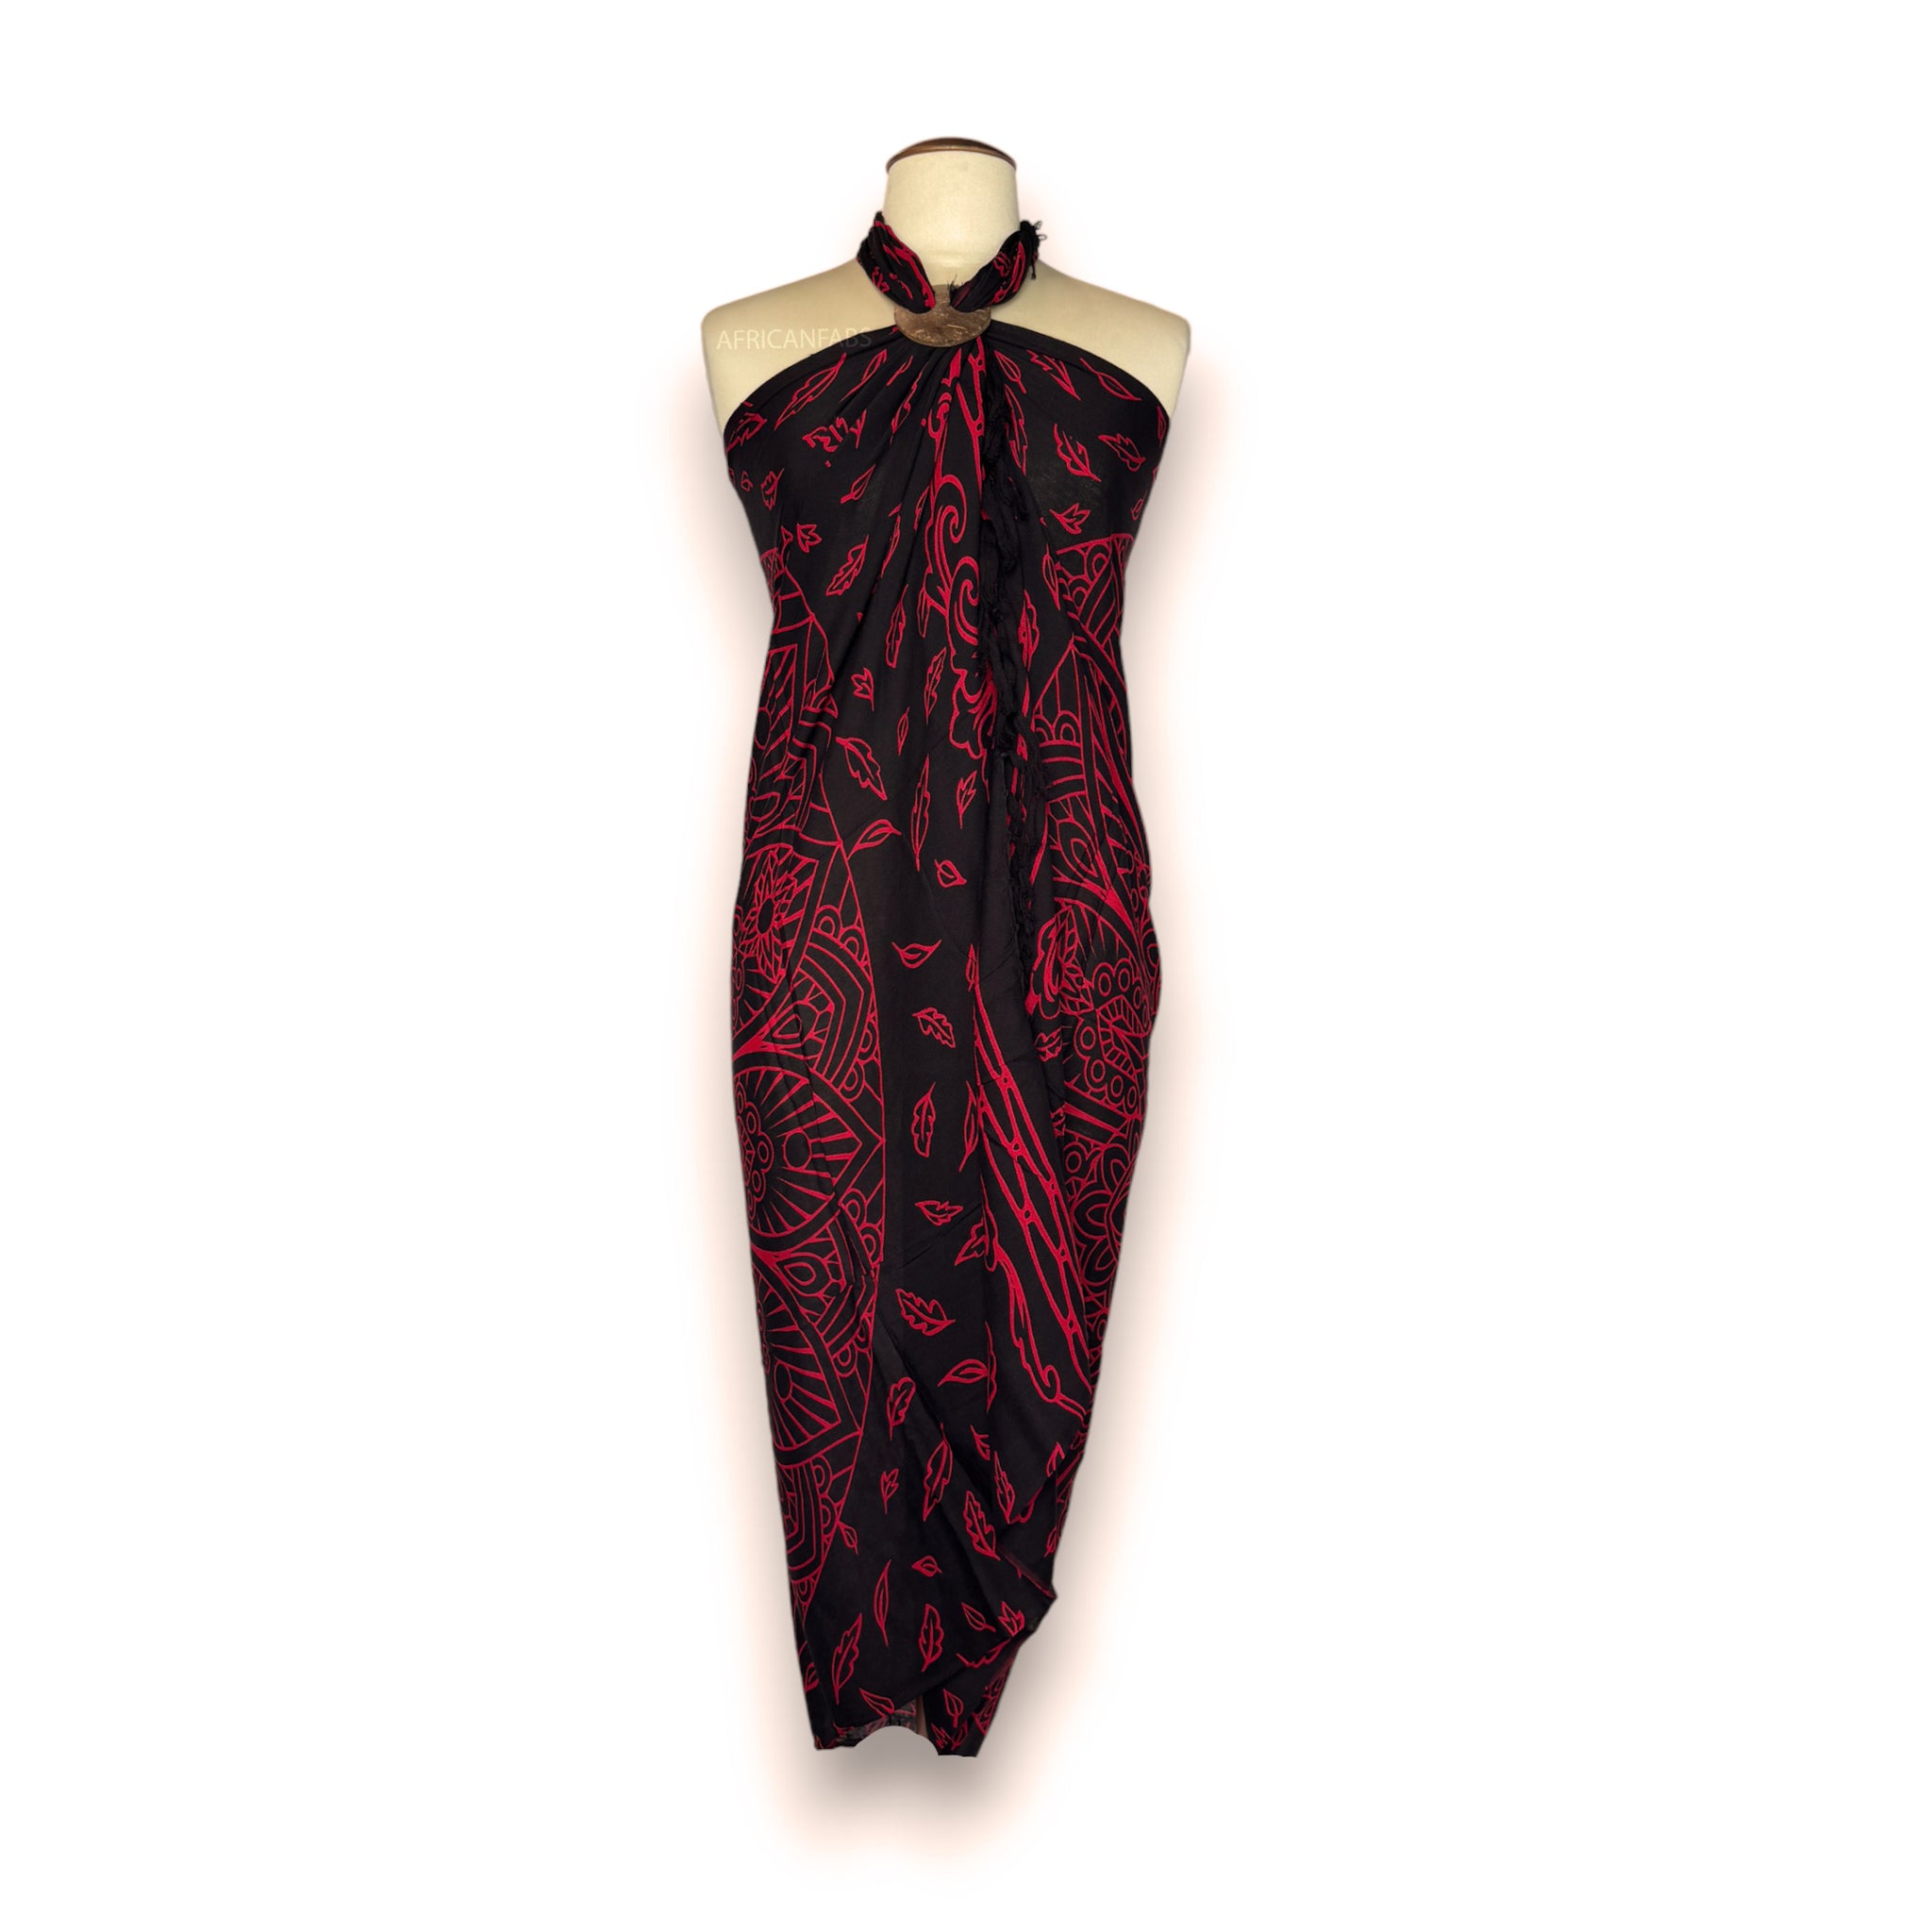 Sarong / pareo - Beachwear wrap skirt - Black / red Mandala